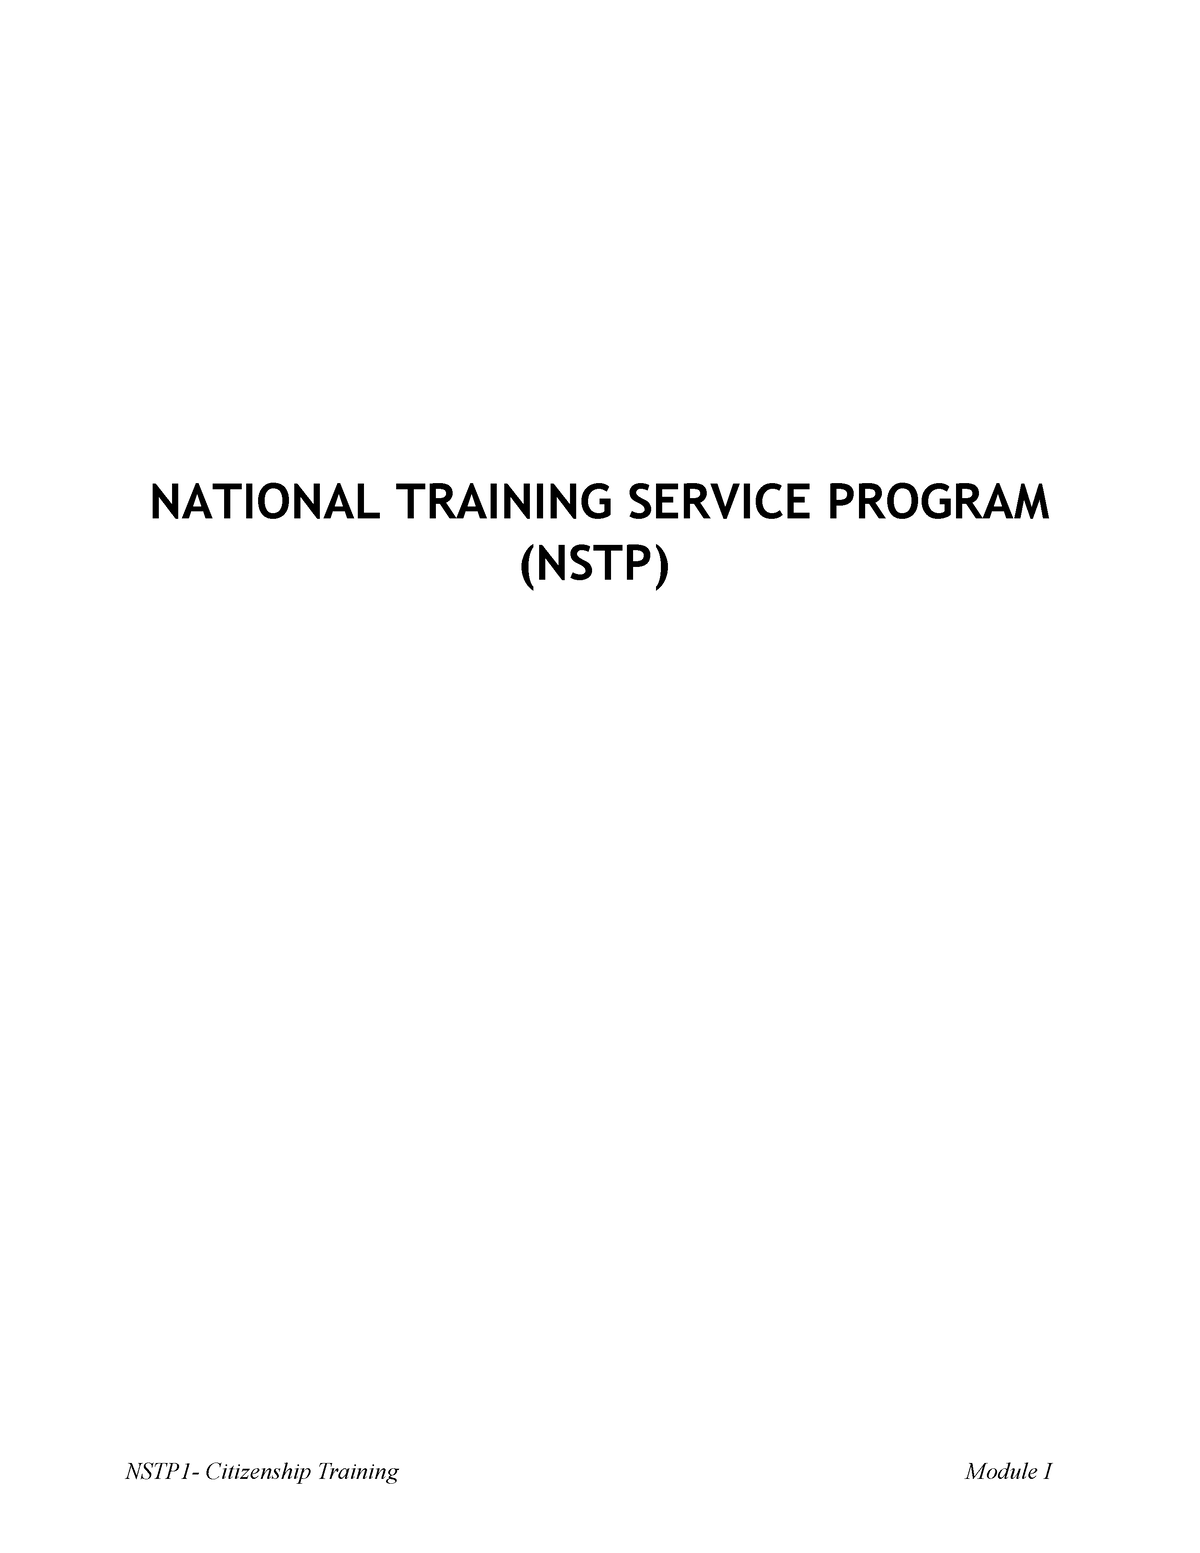 NSTP1, PDF